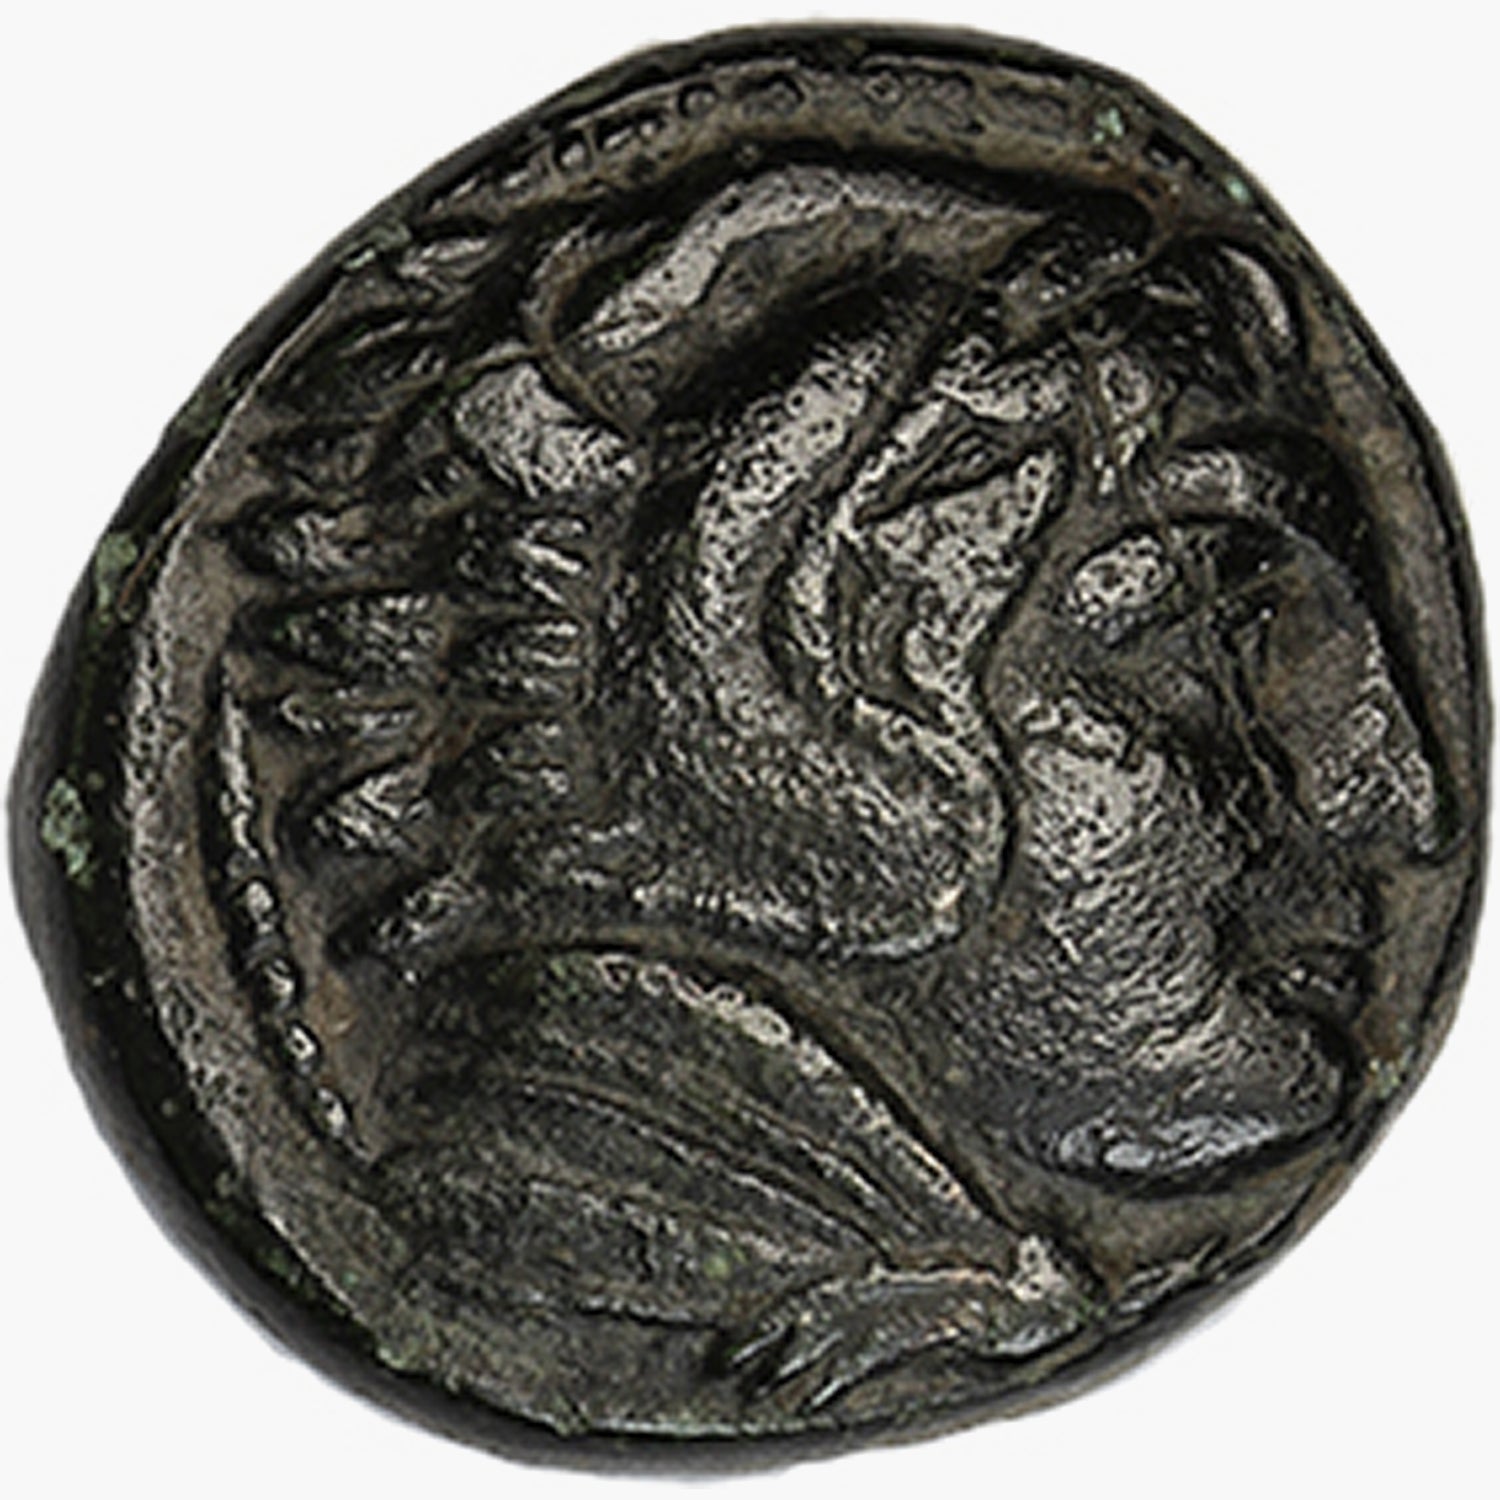 Hemiobol of Alexander the Great